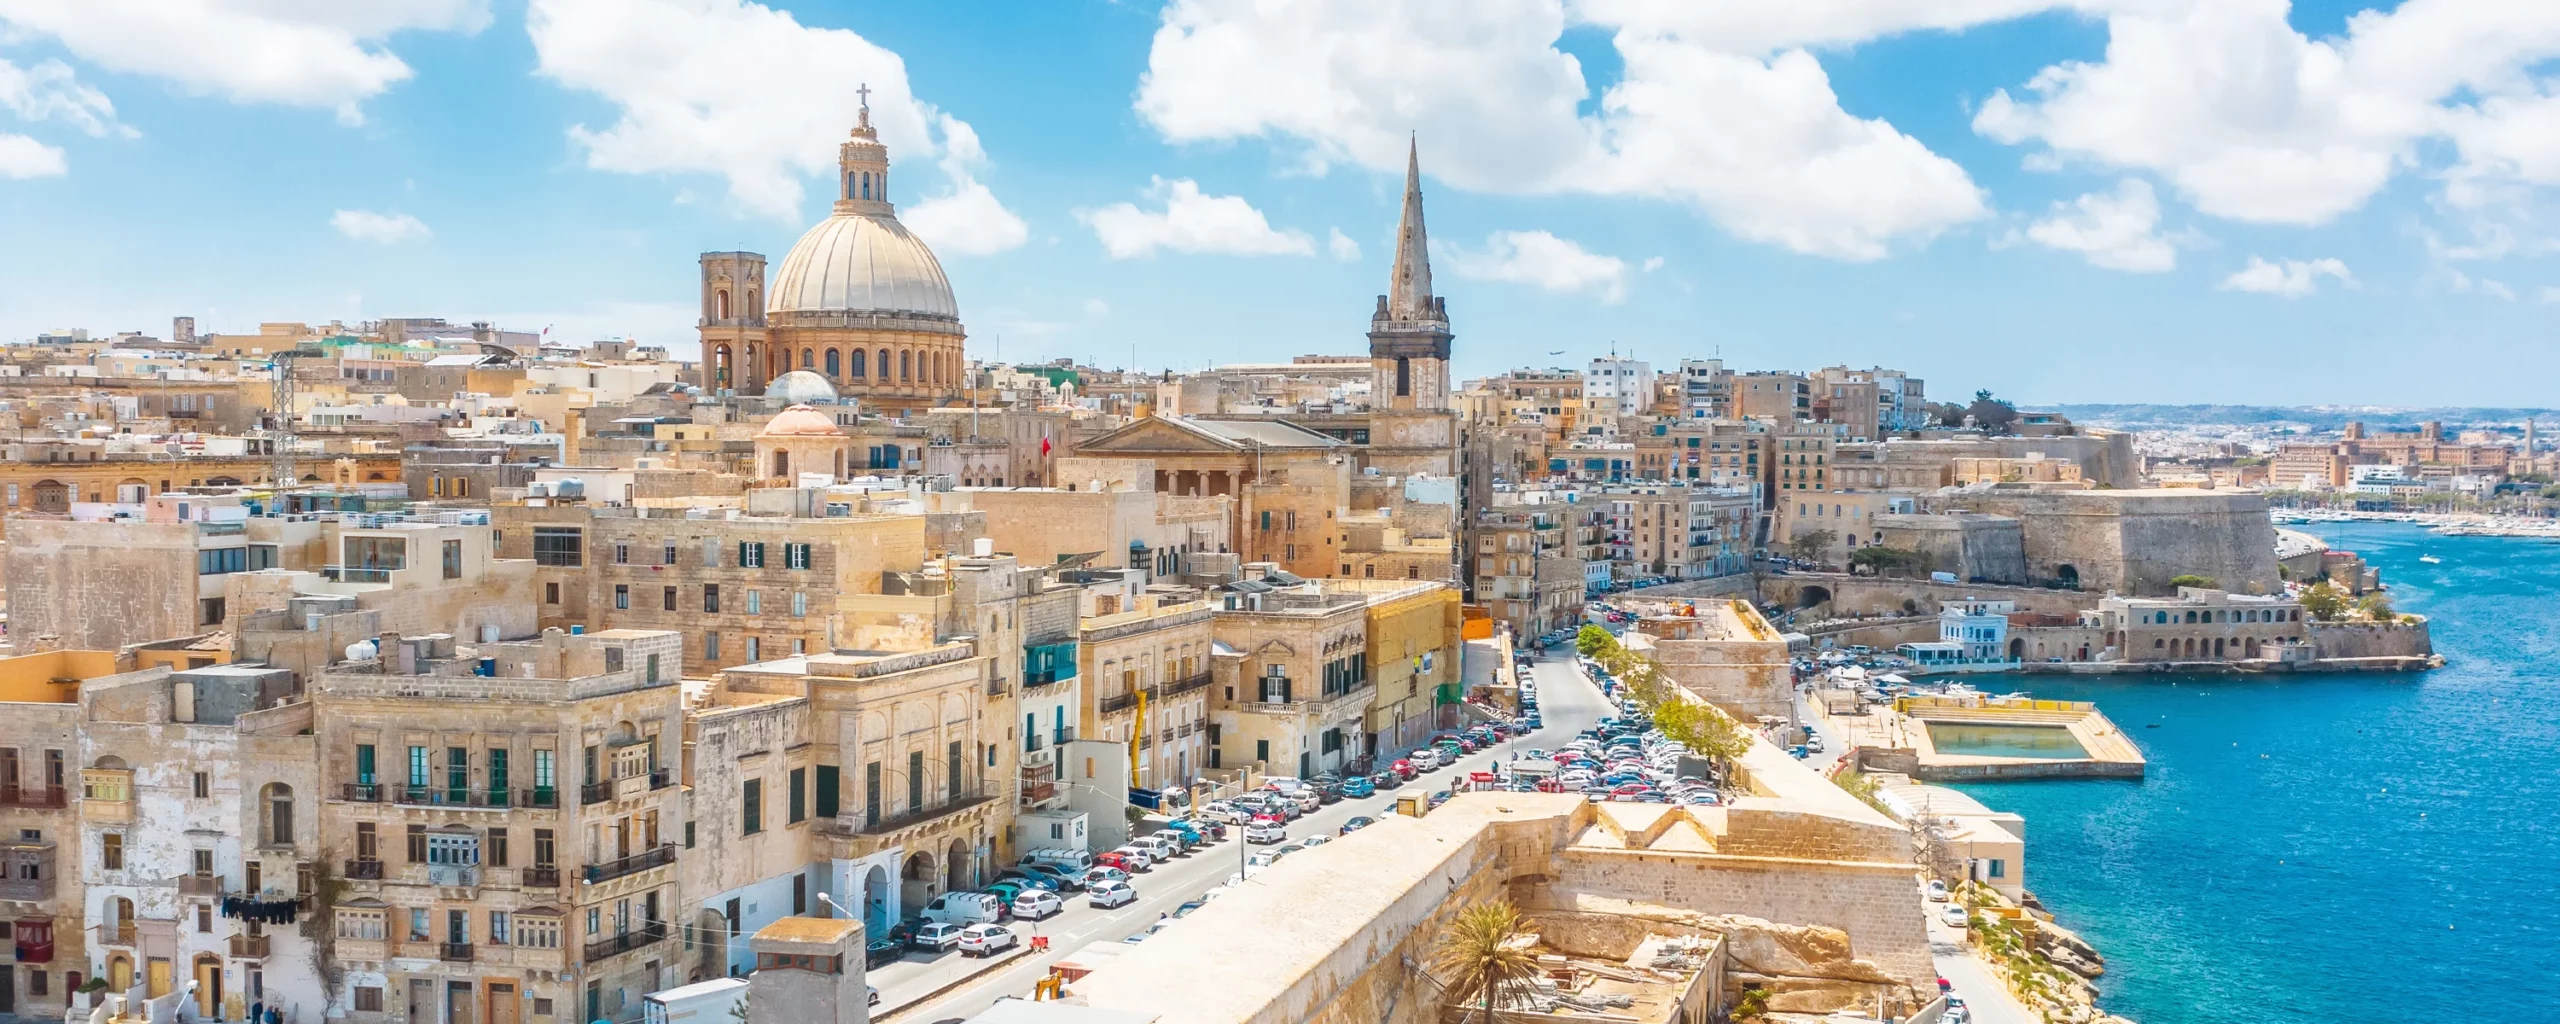 Malta Permanent Residence Programme (MPRP) 